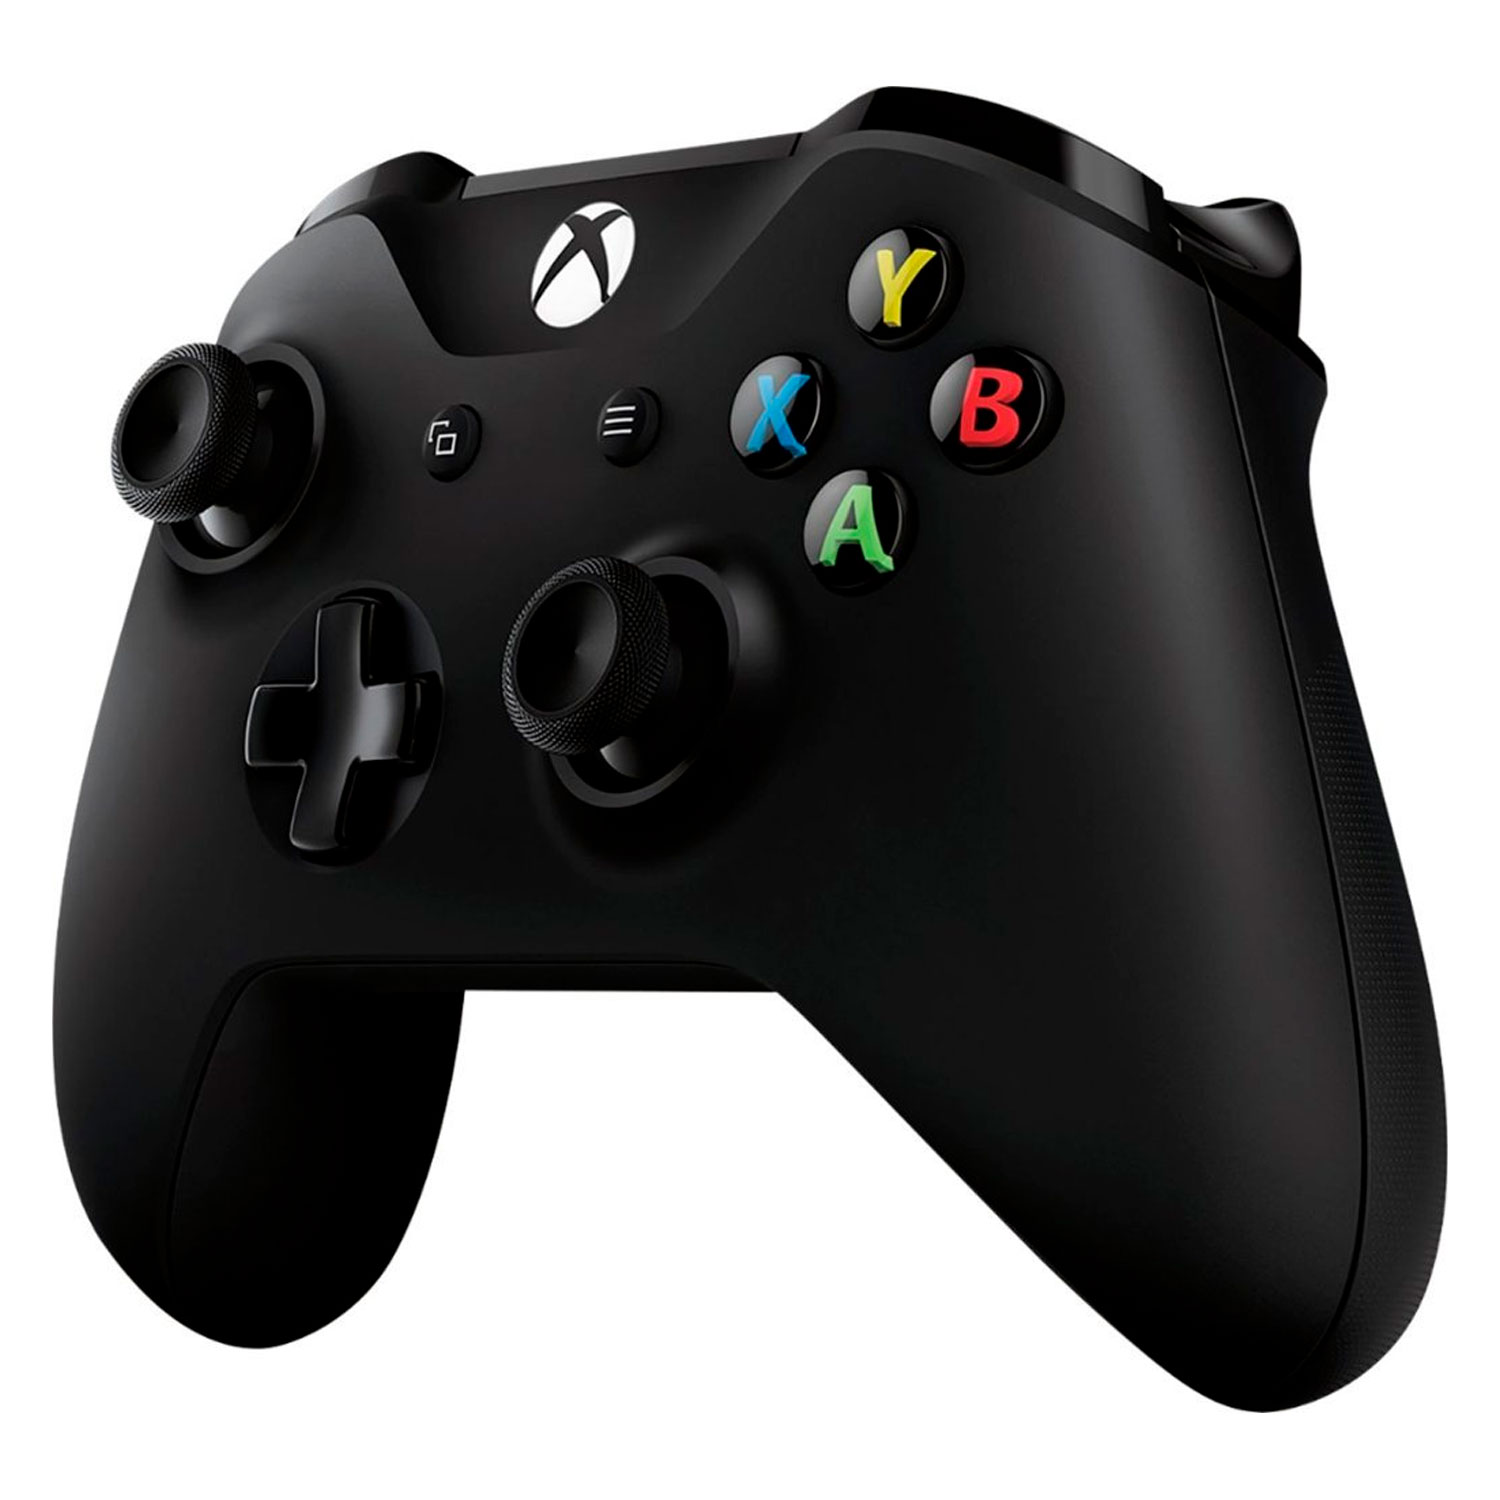 Controle Microsoft para Xbox One S com Cabo - Preto (4N6-00001)	